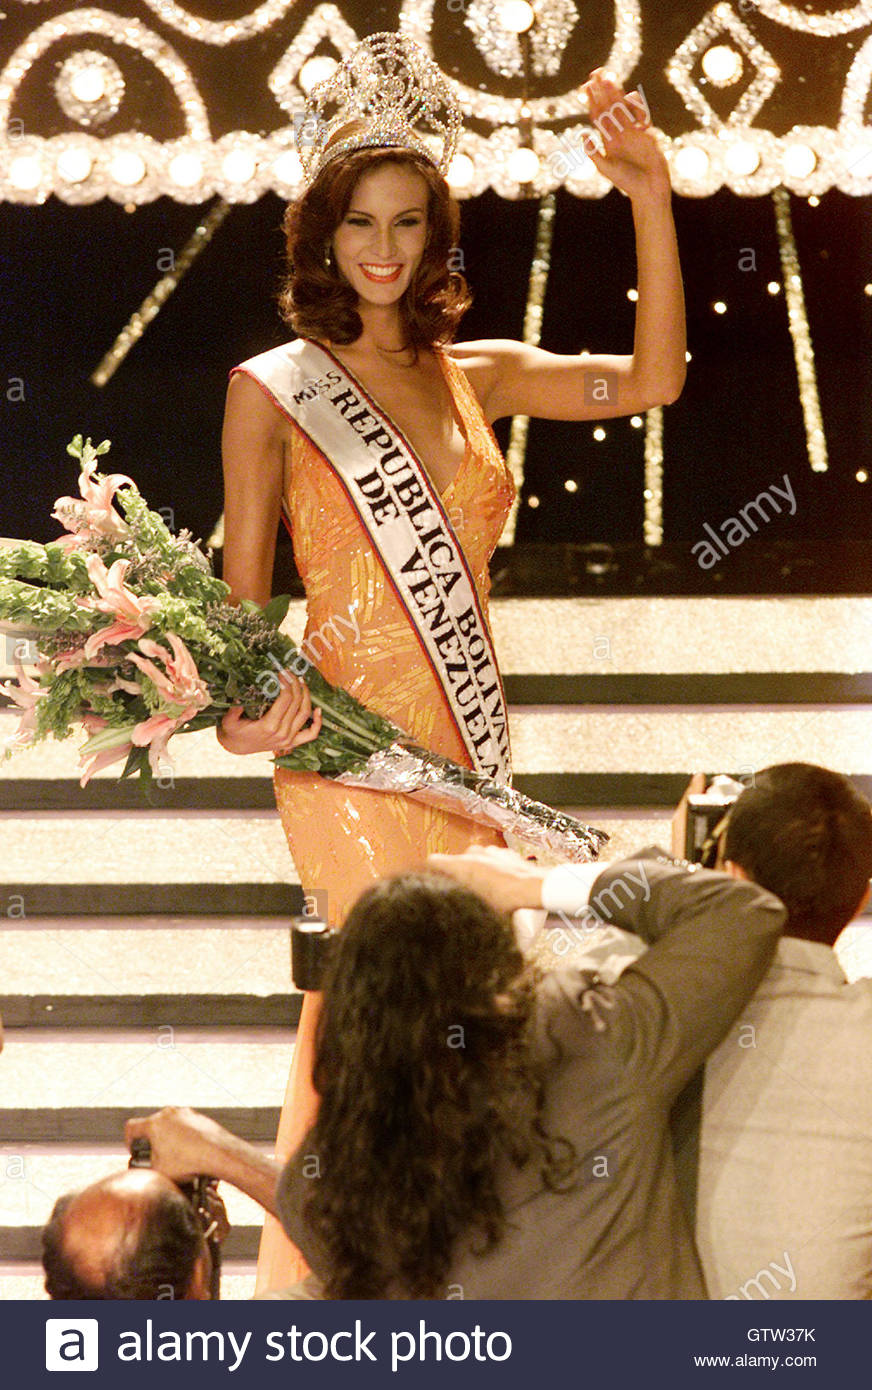 claudia moreno, 1st runner-up de miss universe 2000. - Página 2 Claudi22